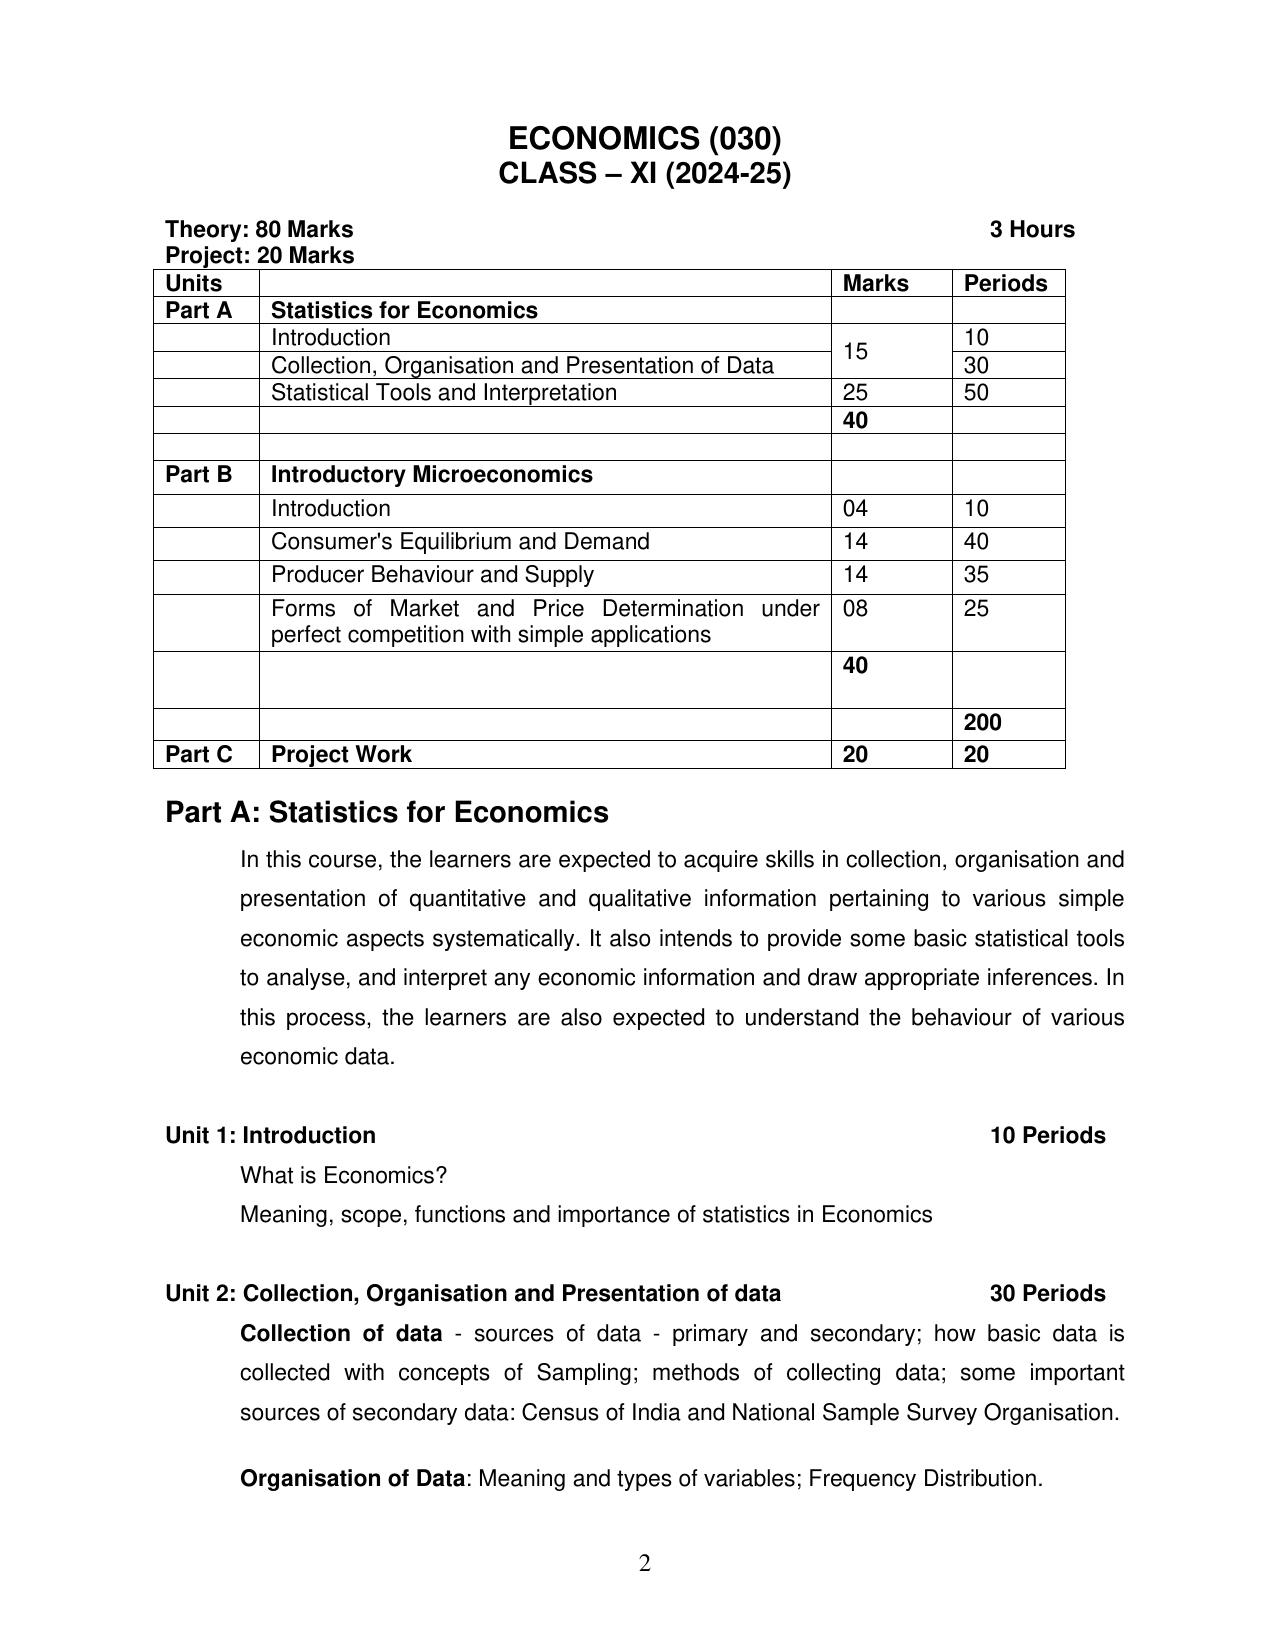 CBSE Class 11 & 12 Syllabus 2022-23 - Economics - Page 2